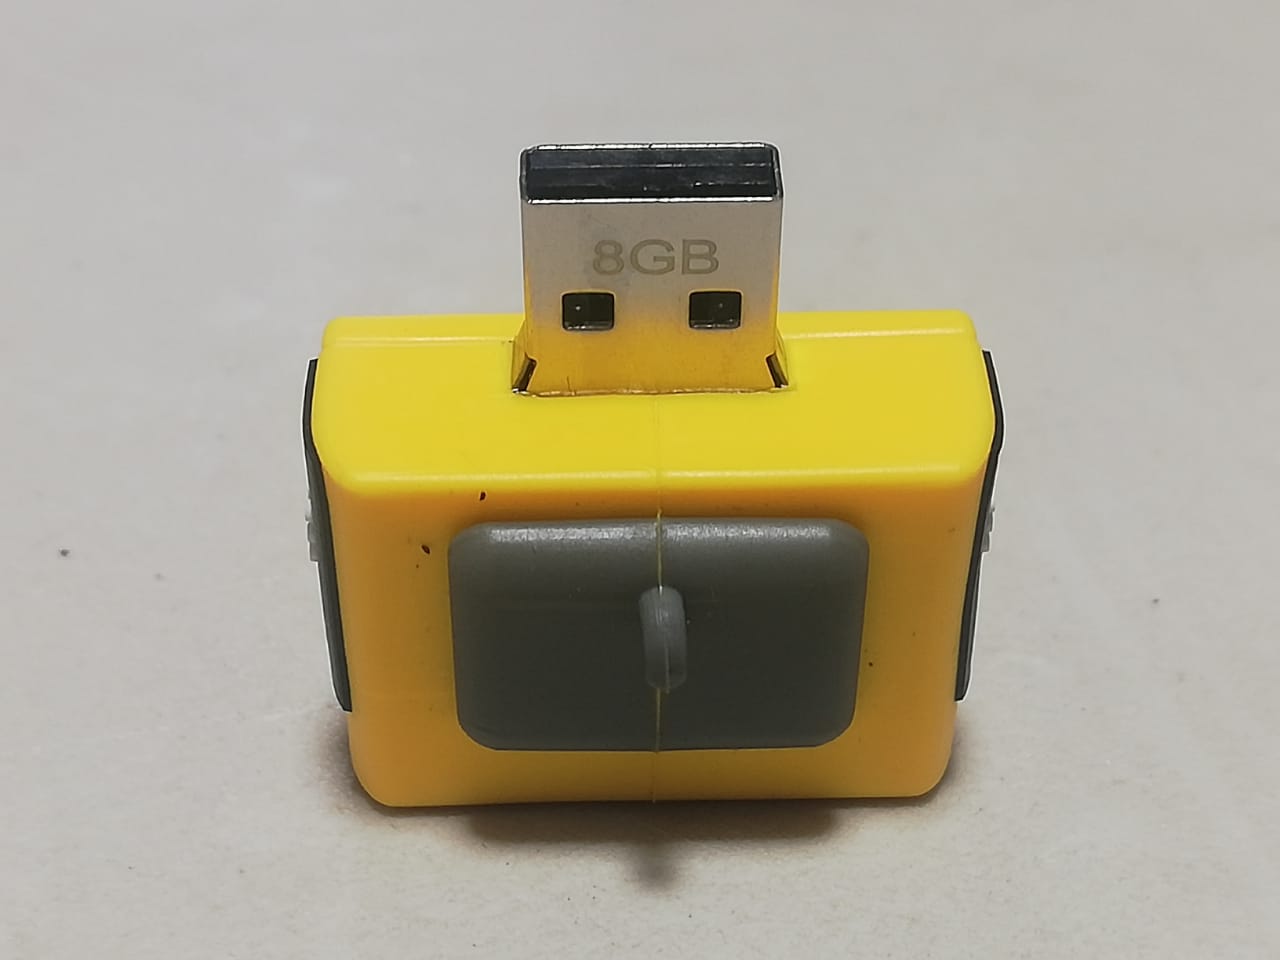 USB Excavadora Caterpillar 320 8GB - CAT SERVICE PERU S.A.C.